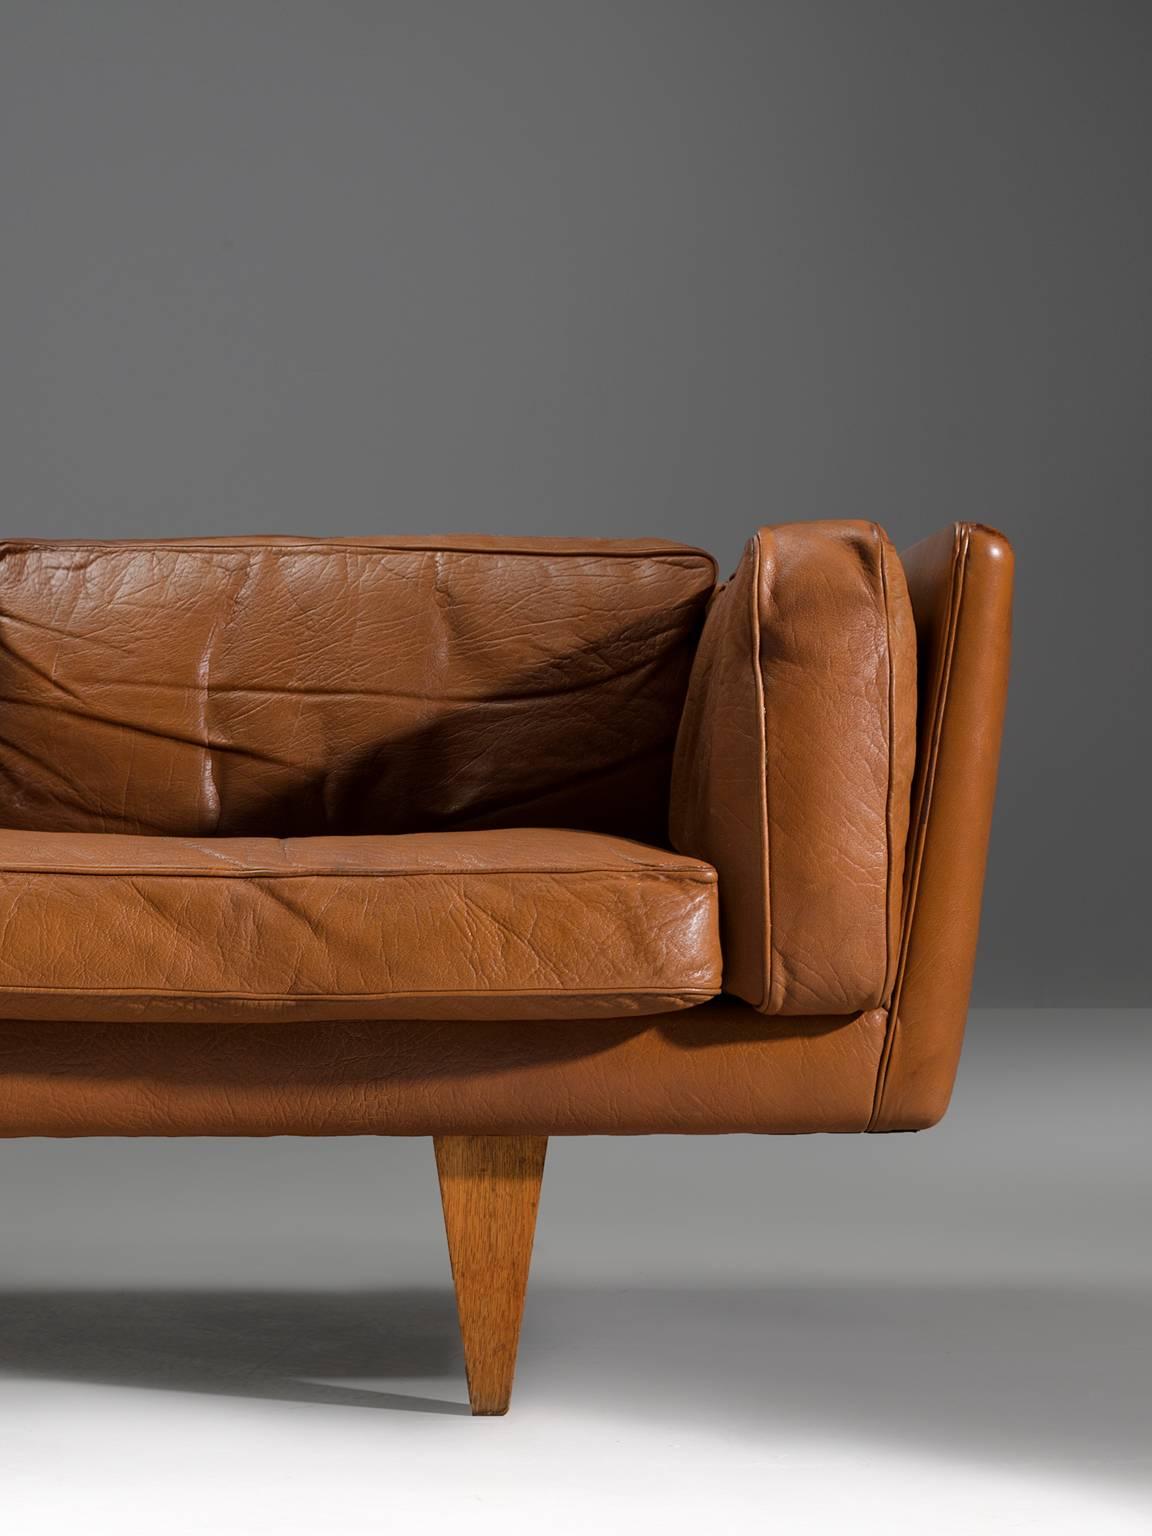 Illum Wikkelsø Restored Three-Seat Sofa in Cognac Leather 1